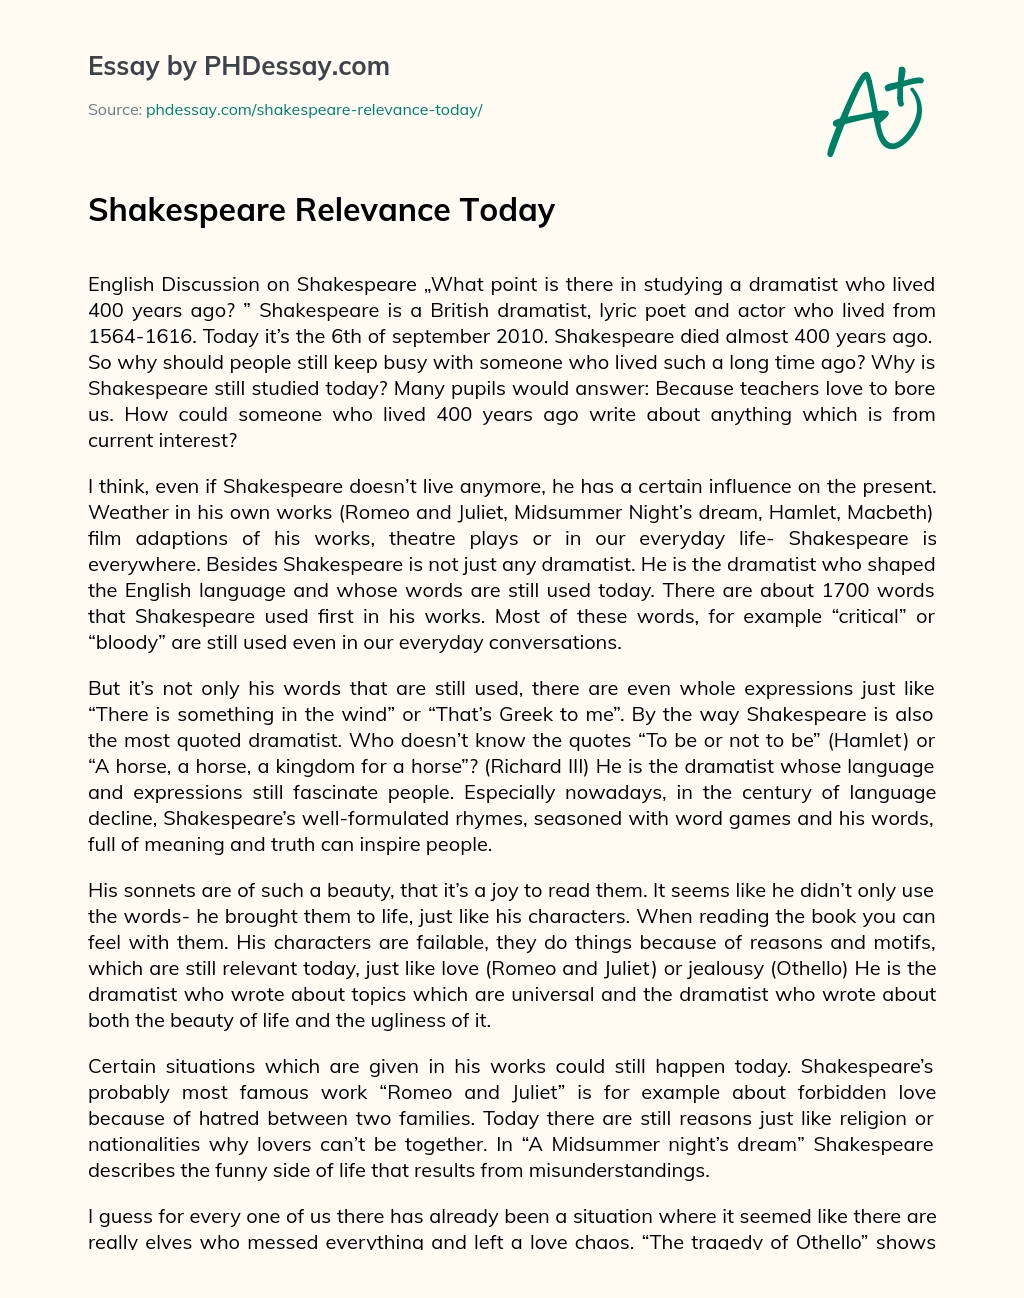 write me custom rhetorical analysis essay on shakespeare